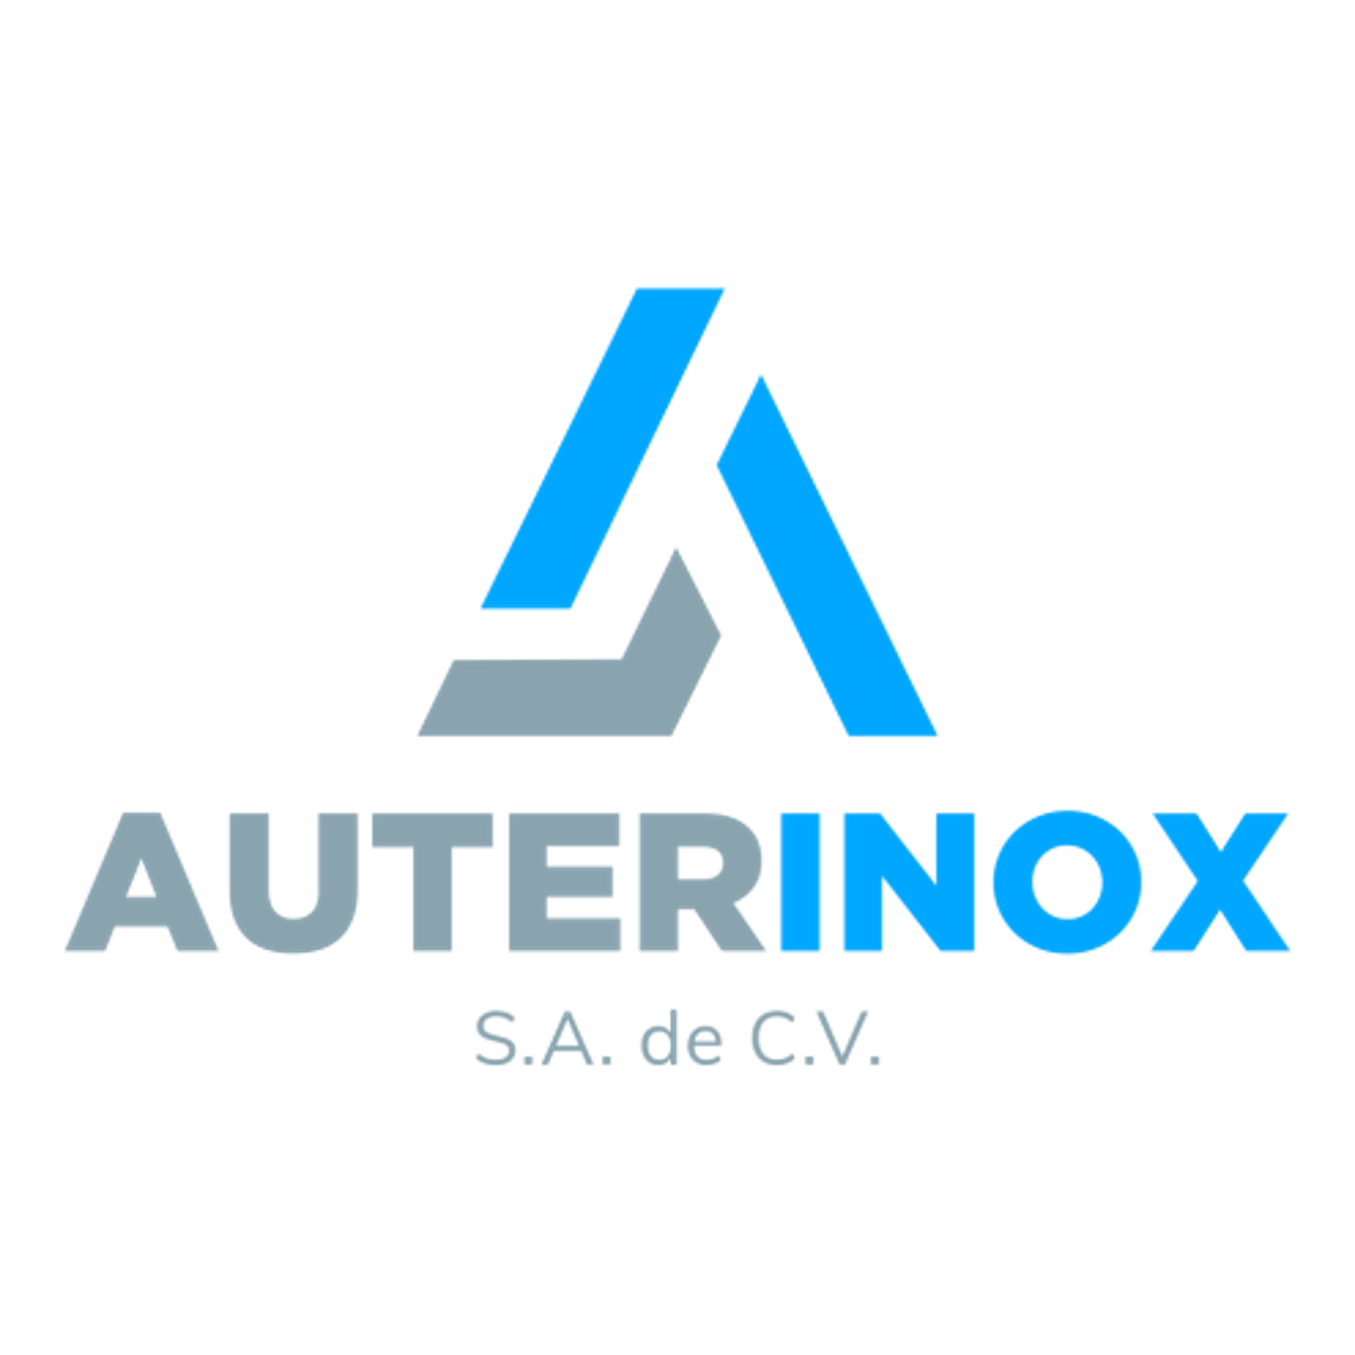 https://auterinox.com/index.html